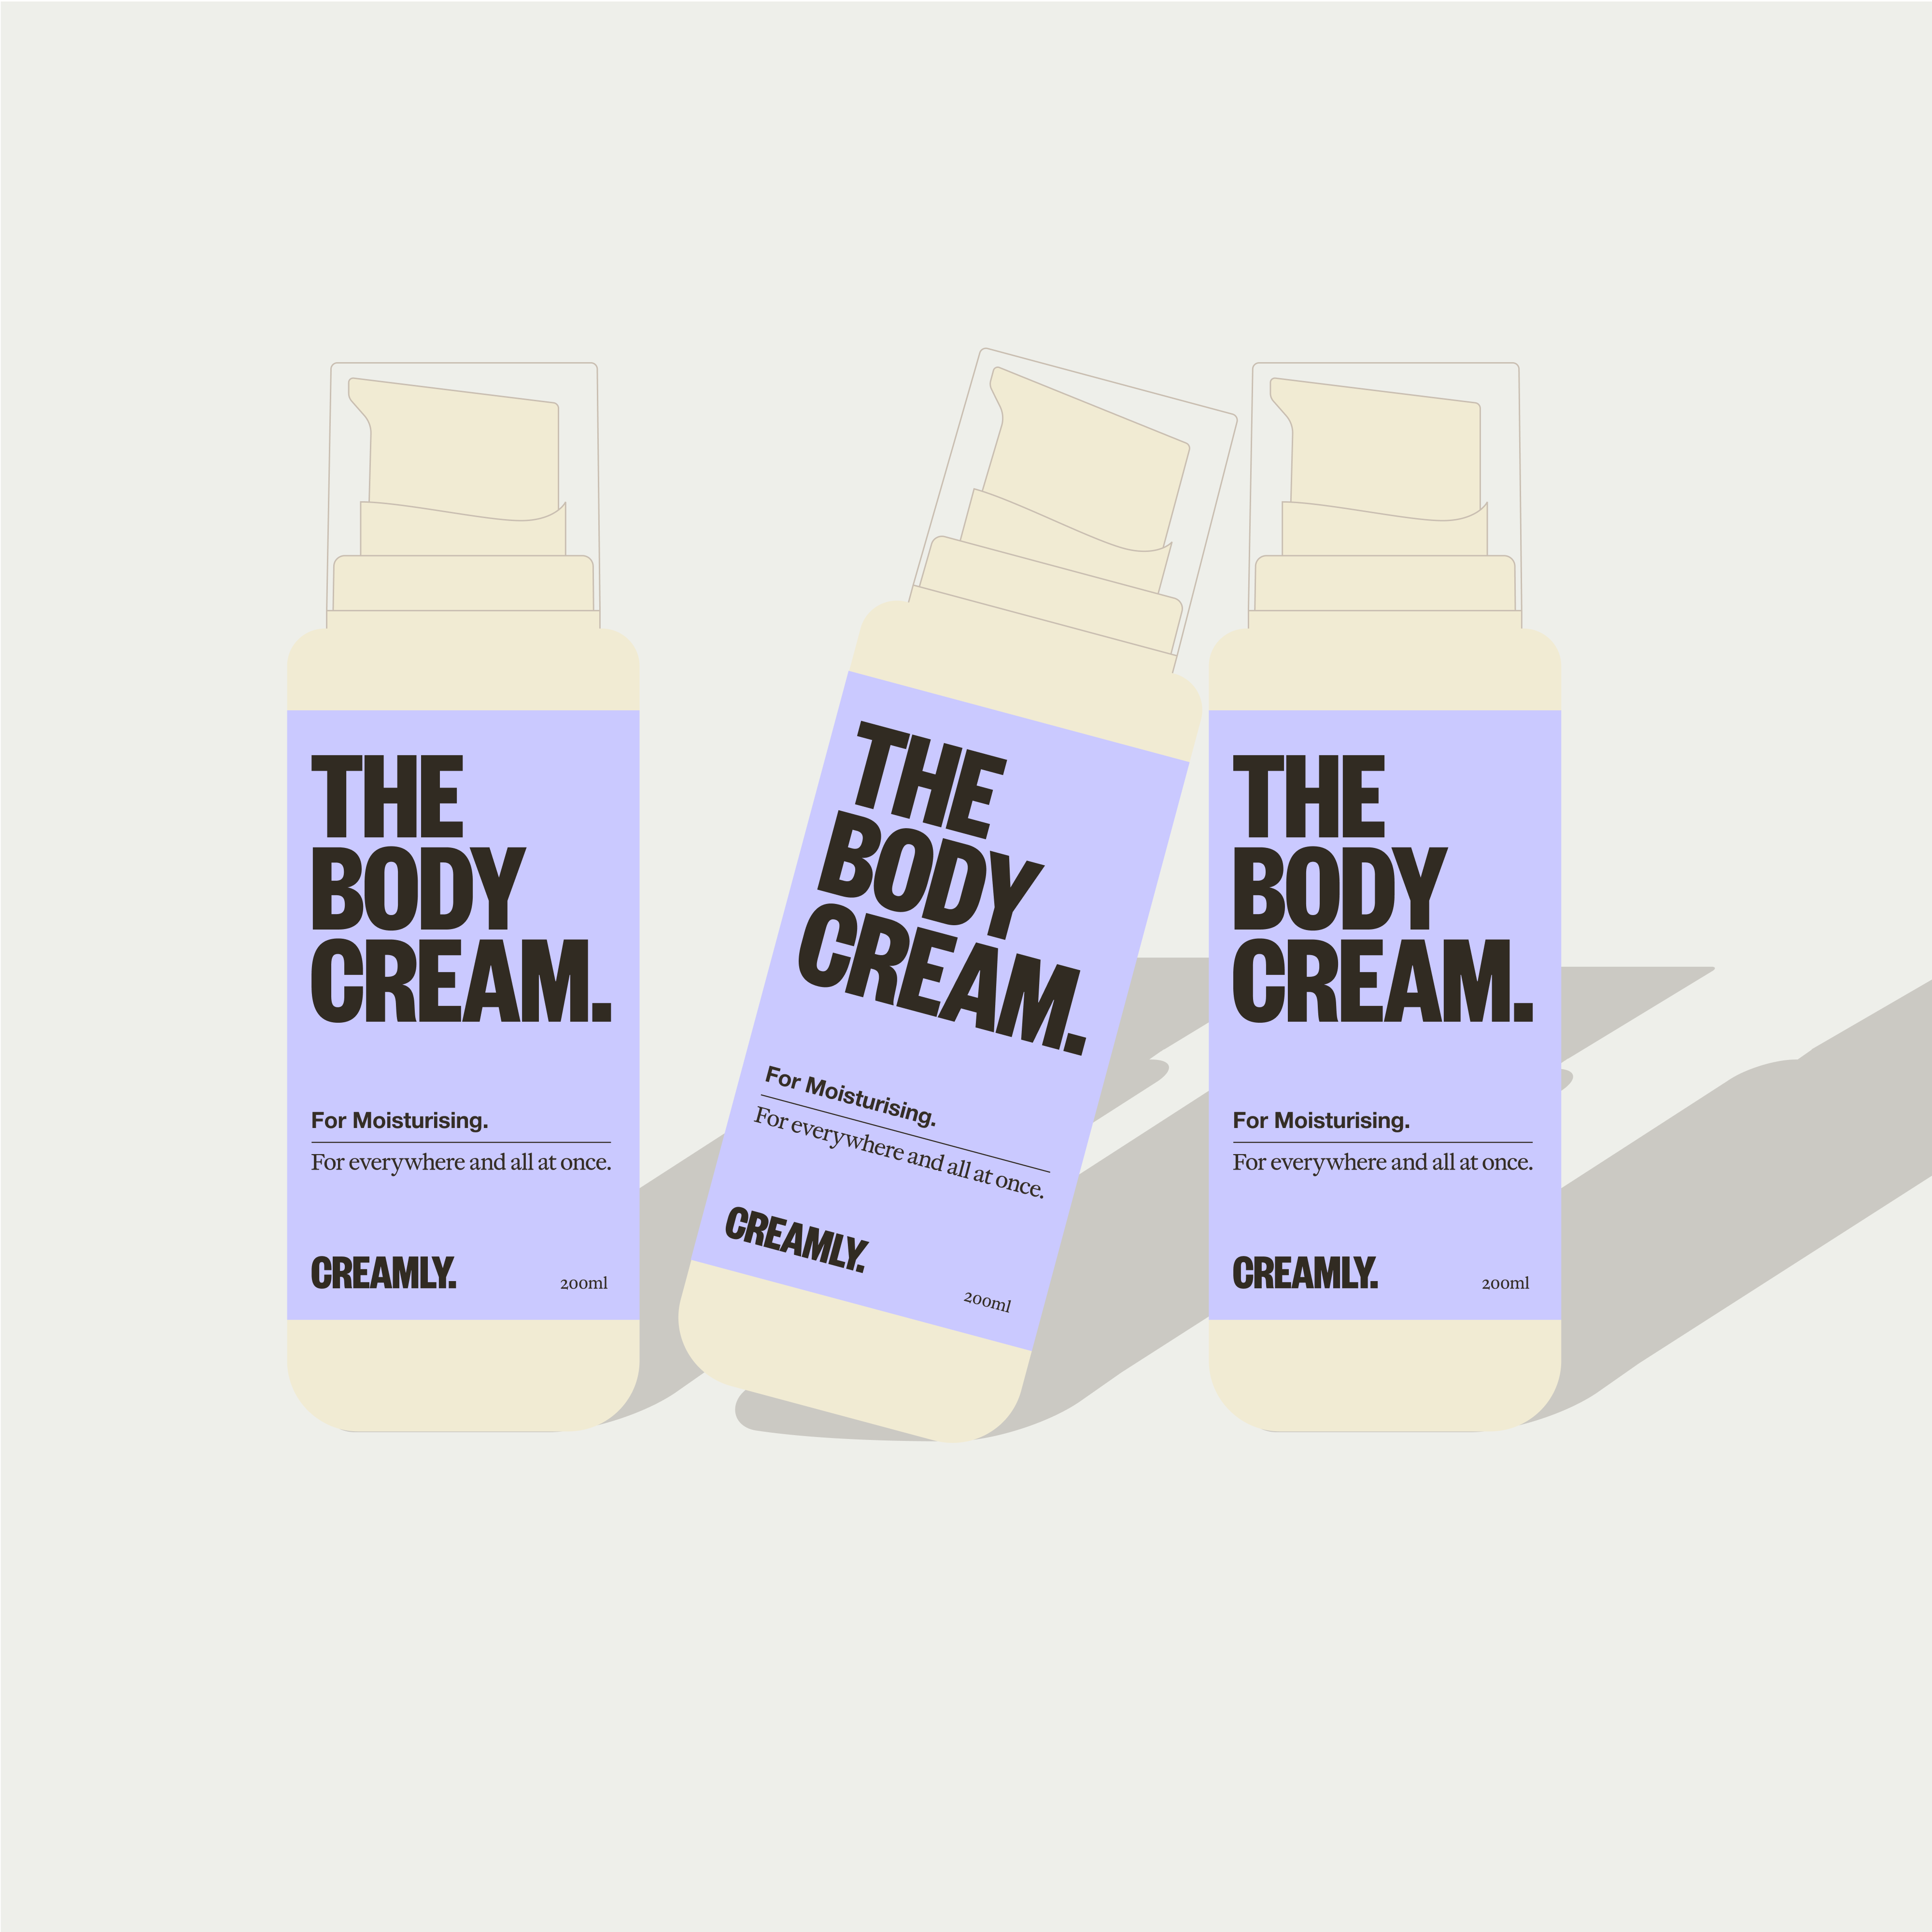 The Body Cream. For Moisturising.